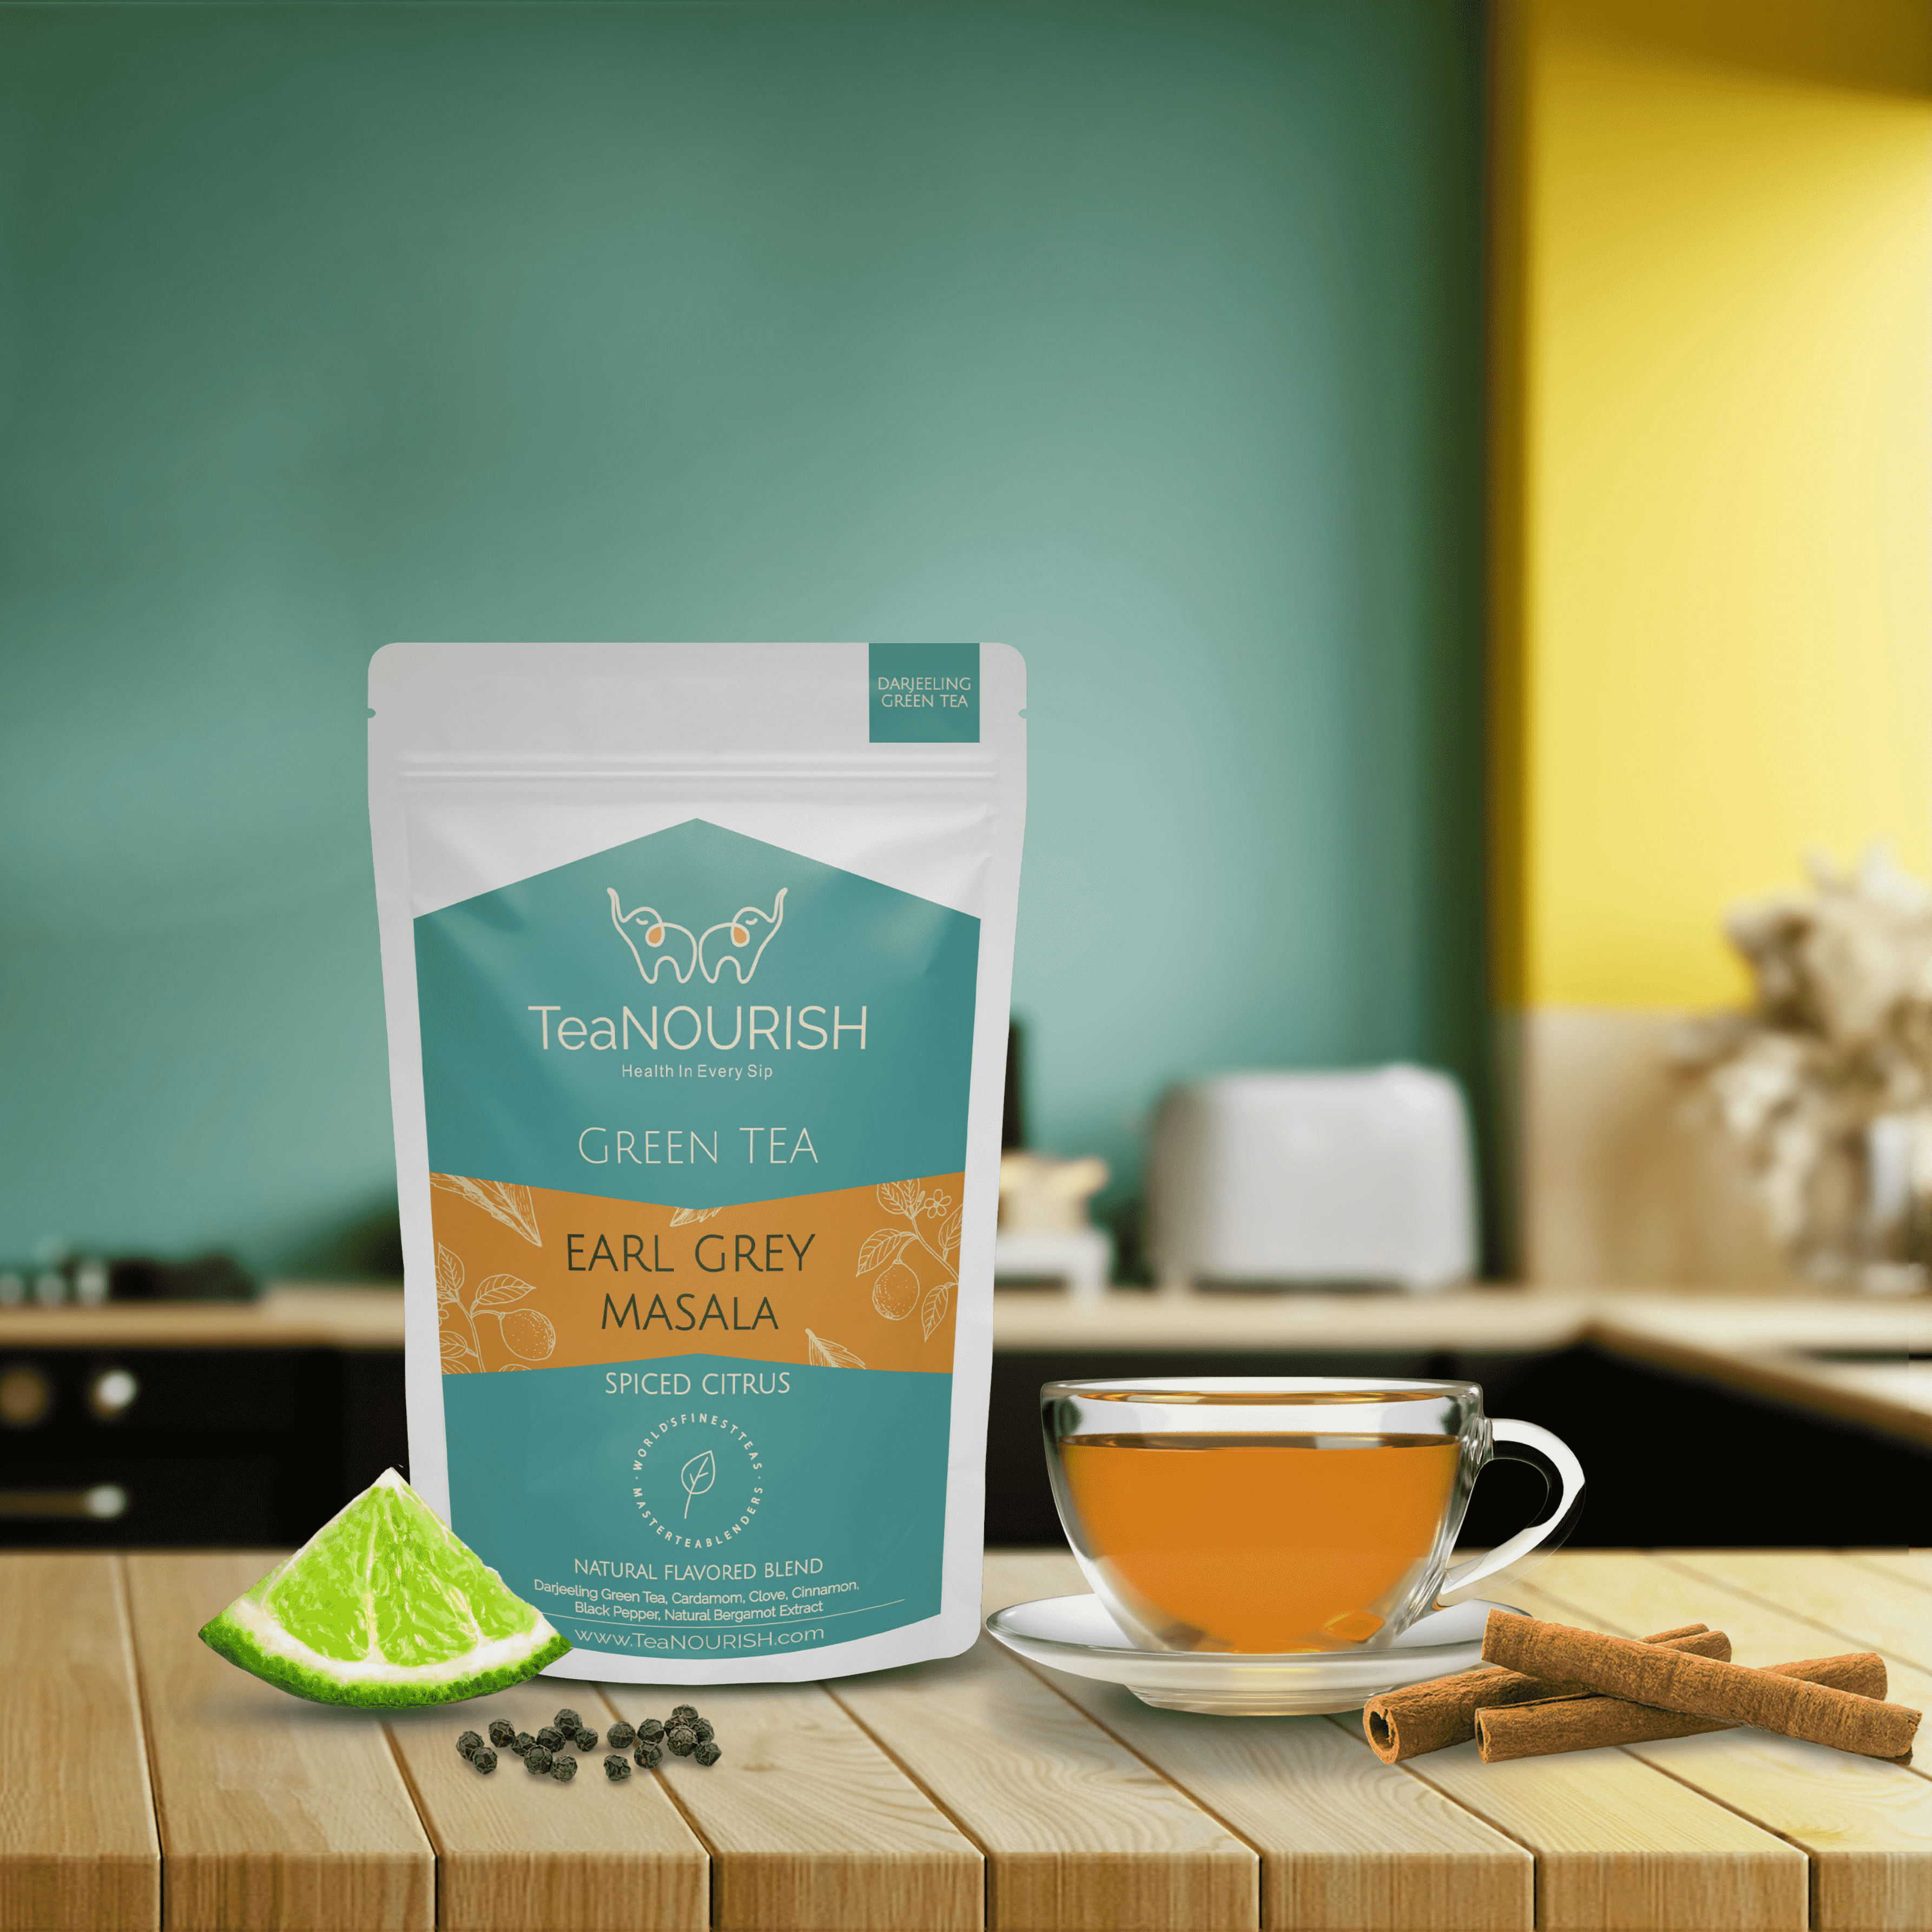 Earl Grey Masala Green Tea Product Picture